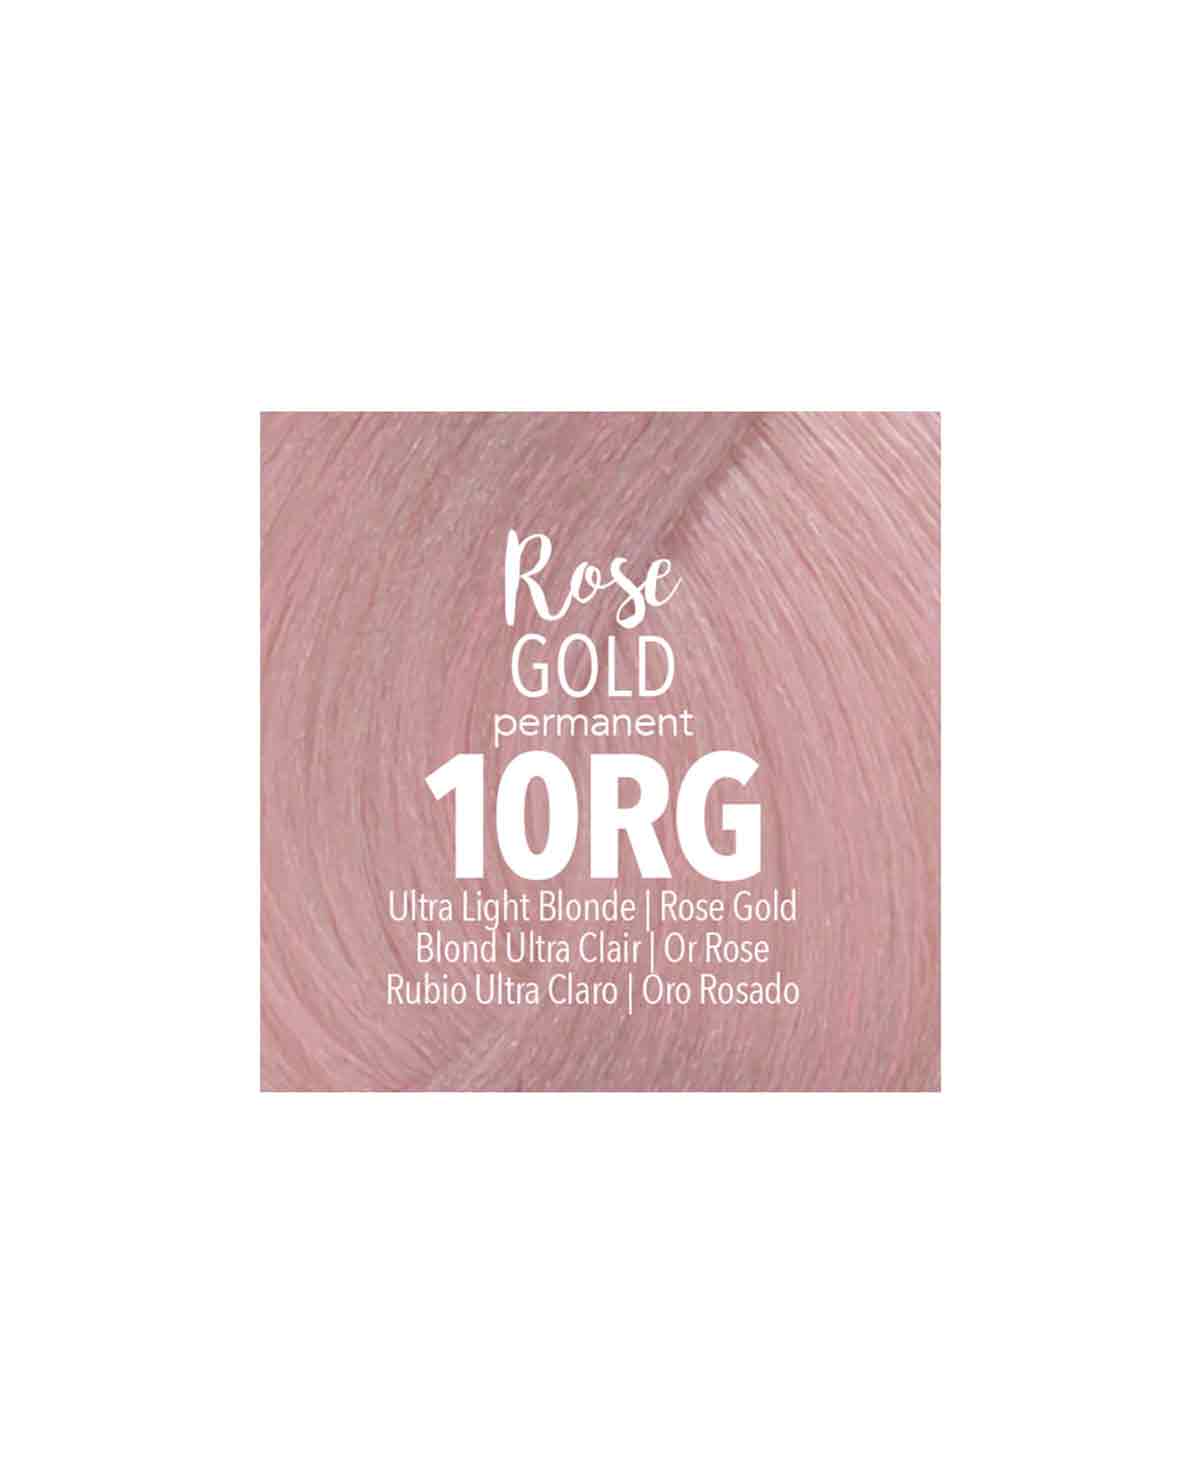 Mydentity - 10RG Ultra Light Blonde Rose Gold